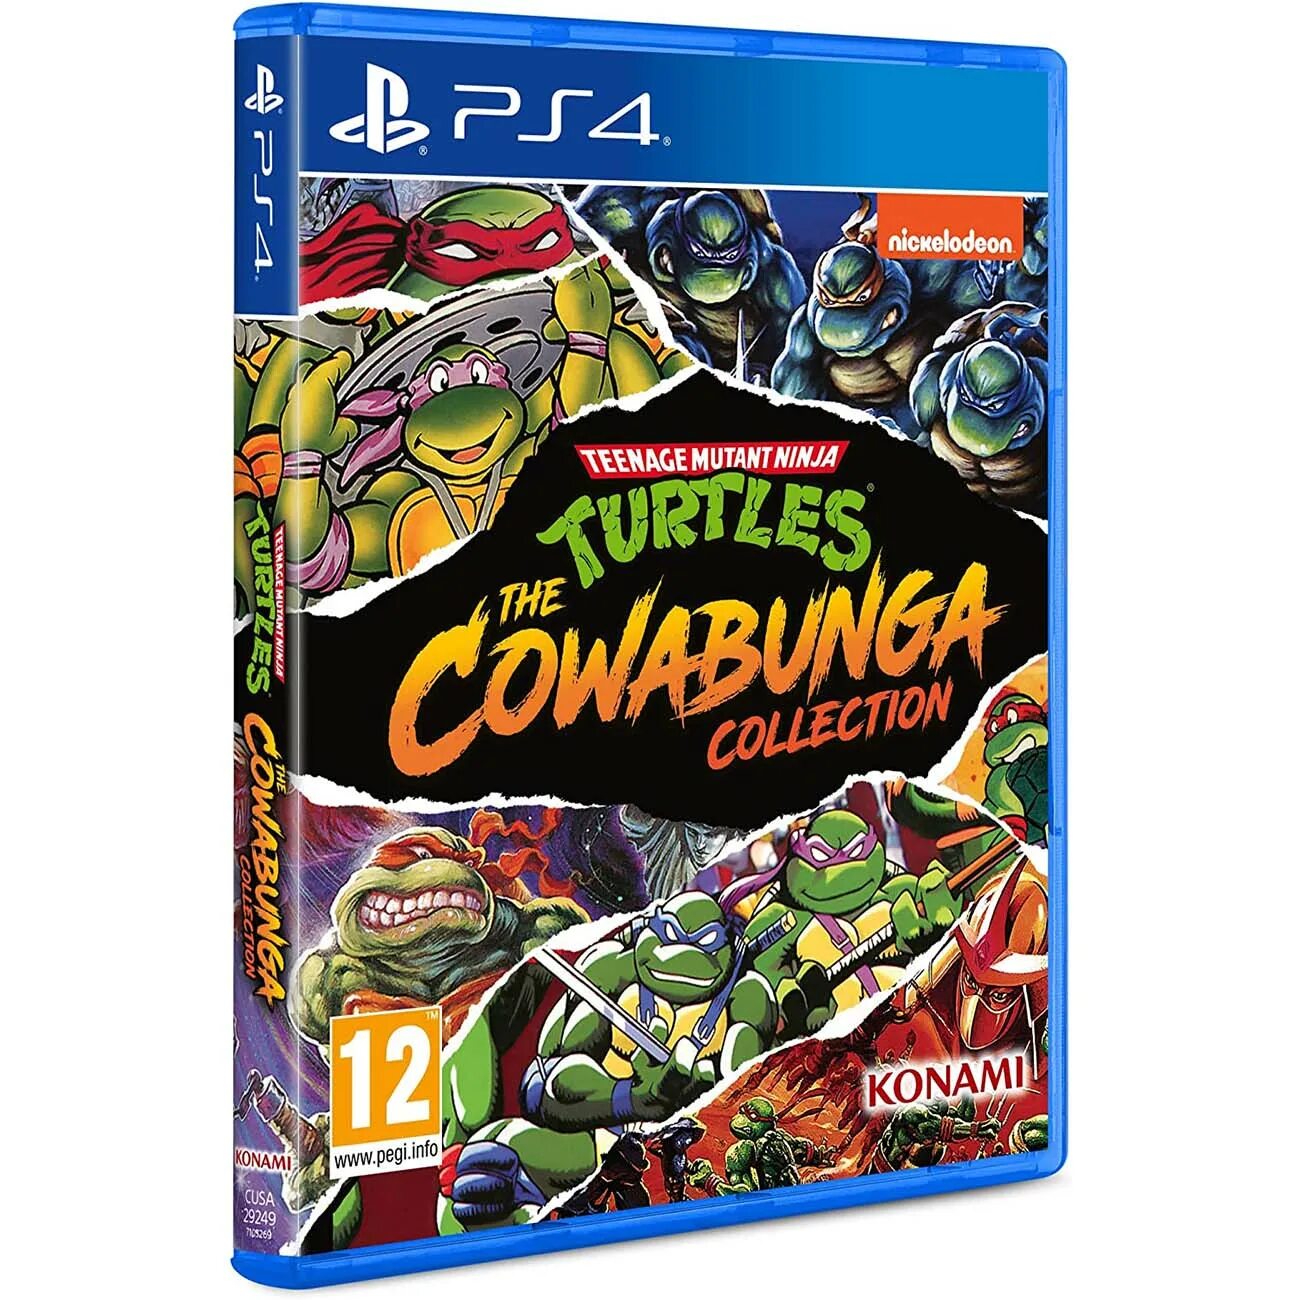 TMNT Cowabunga collection ps4. Teenage Mutant Ninja Turtles: the Cowabunga collection ps4 & ps5. Черепашки ниндзя ps4. Teenage Mutant Ninja Turtles: Cowabunga collection Nintendo Switch.